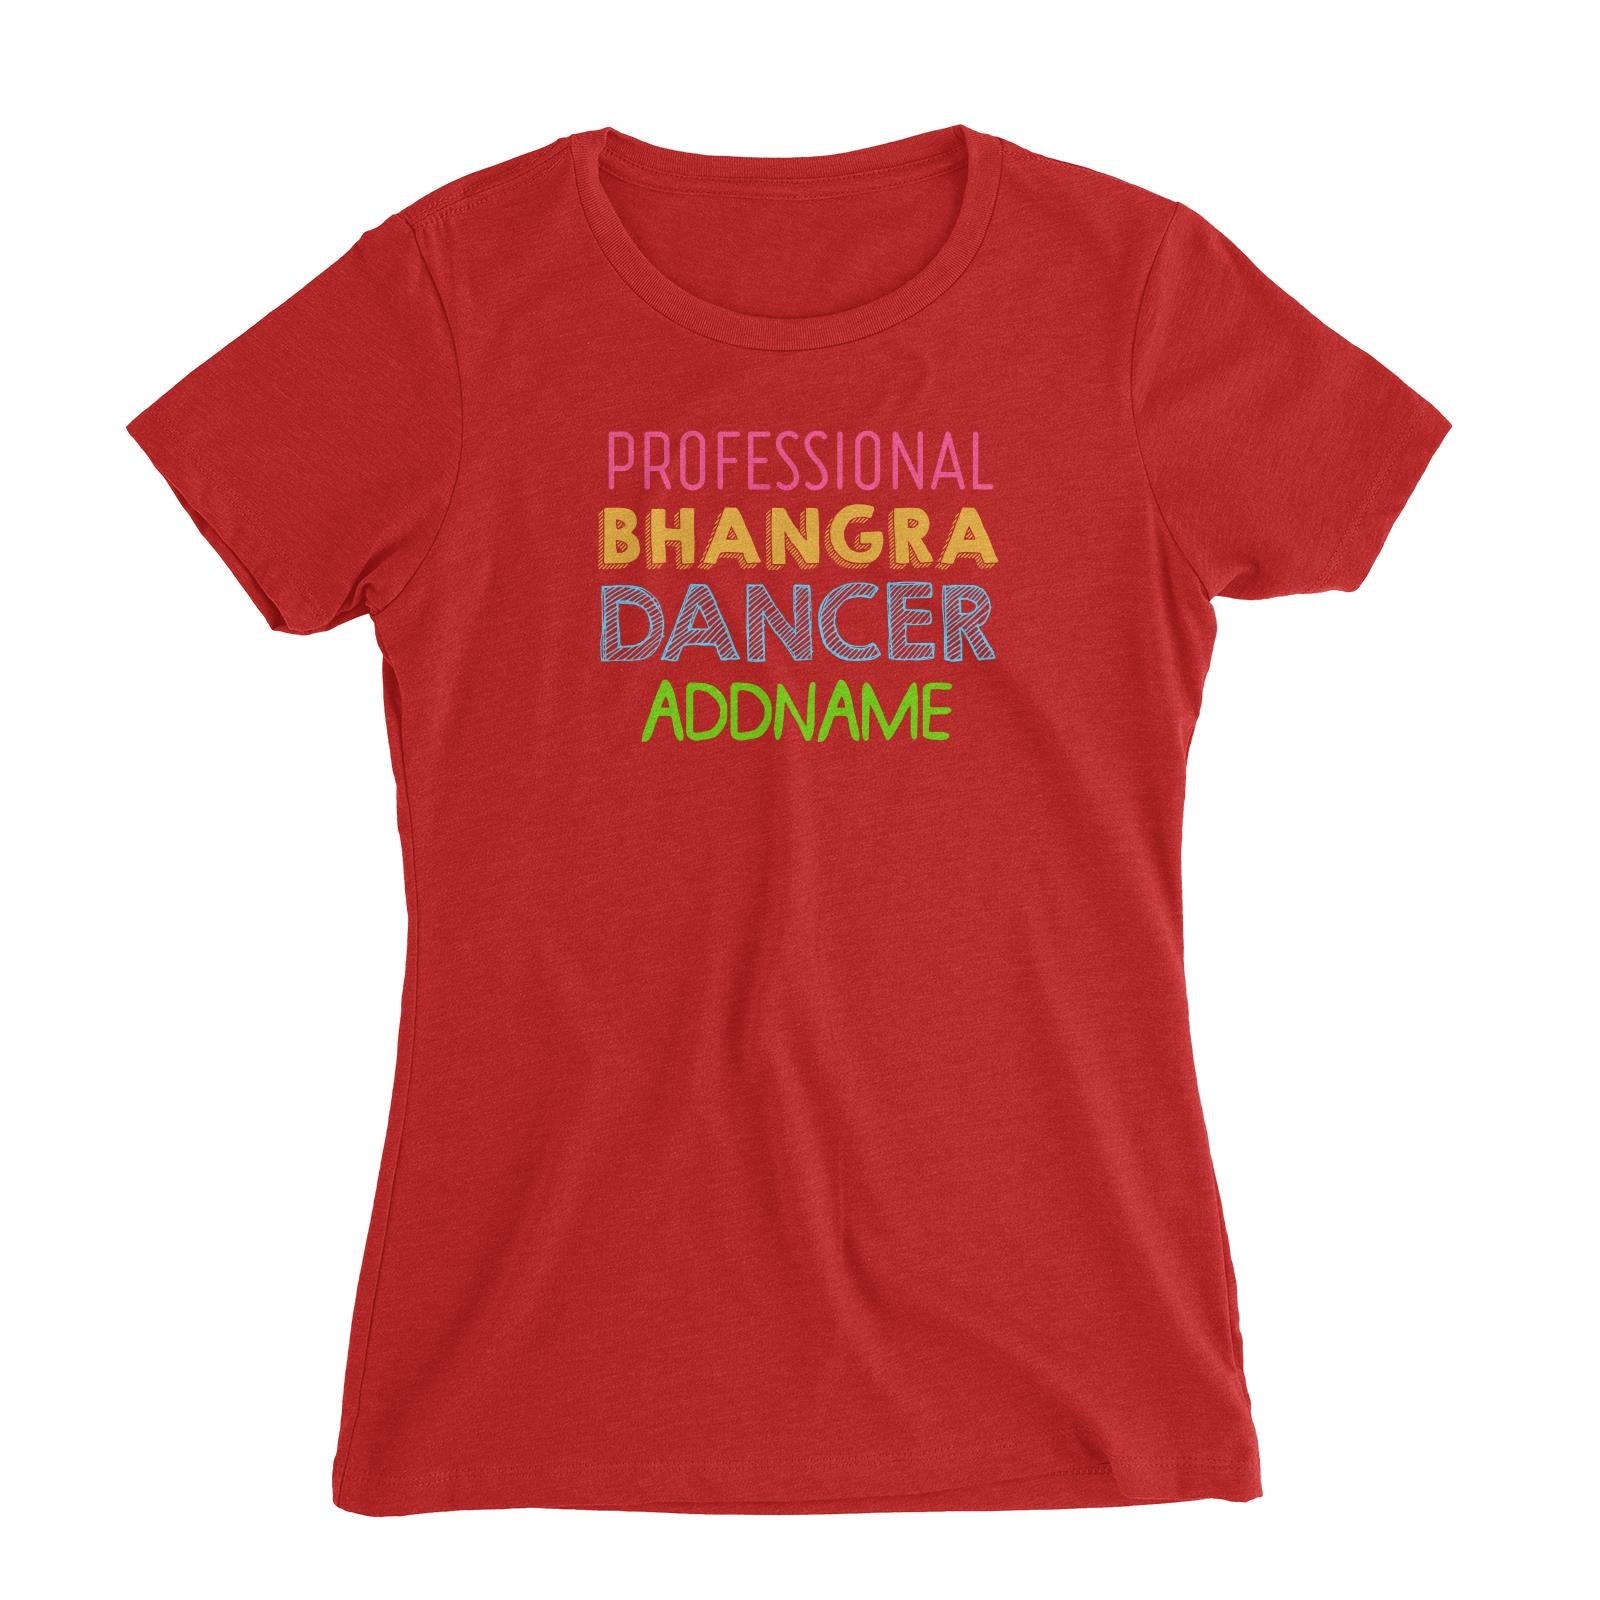 Professional Bhangra Dancer Addname Women's Slim Fit T-Shirt